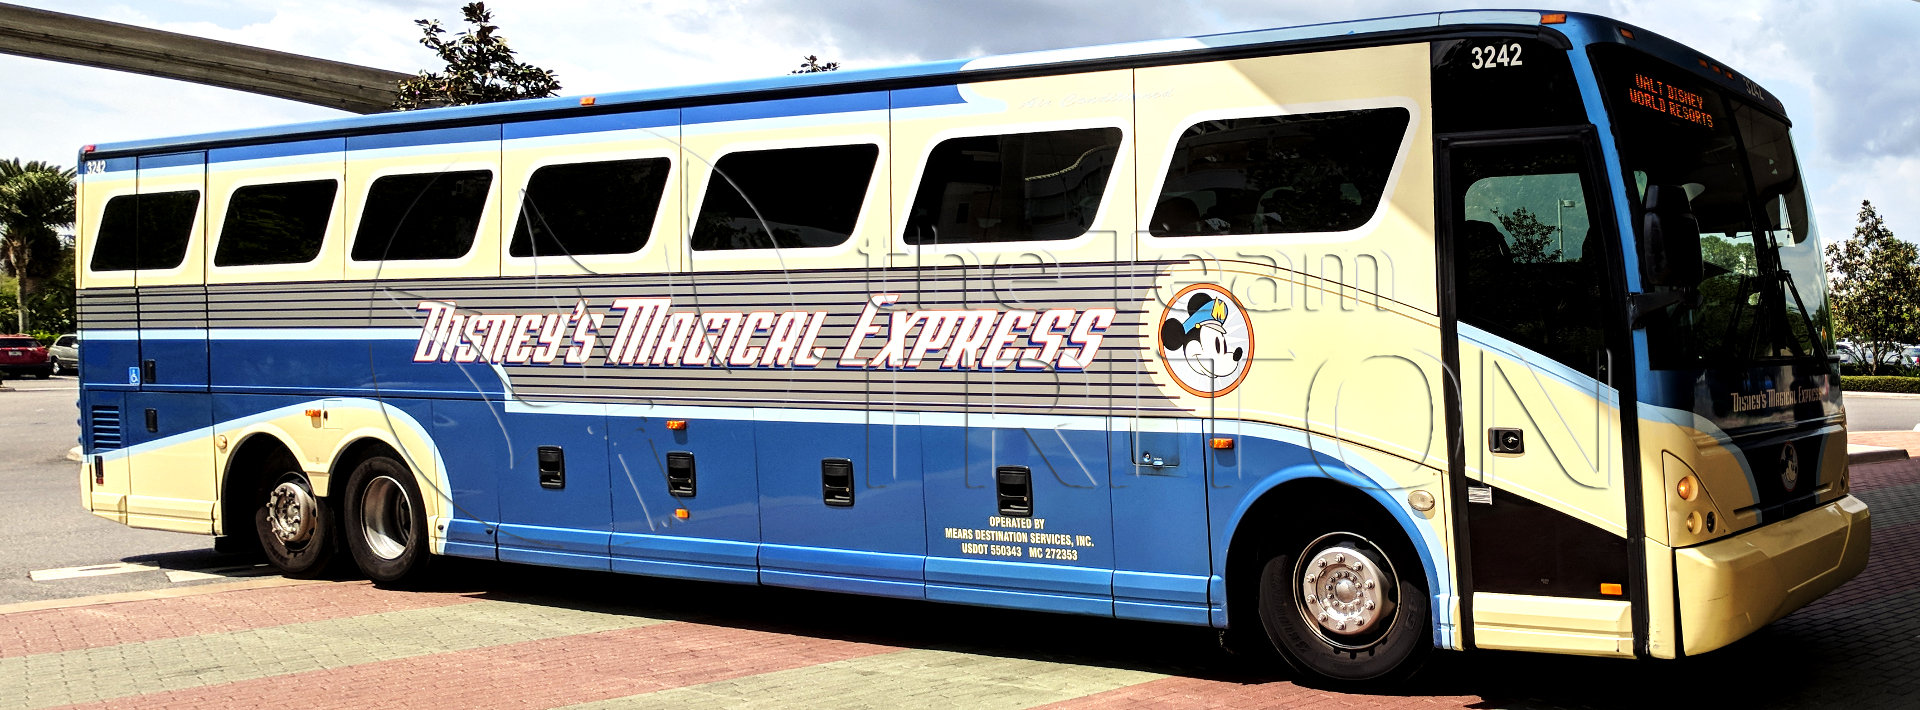 Disneys-Magical-Express-DME-bus-eyecatch-001